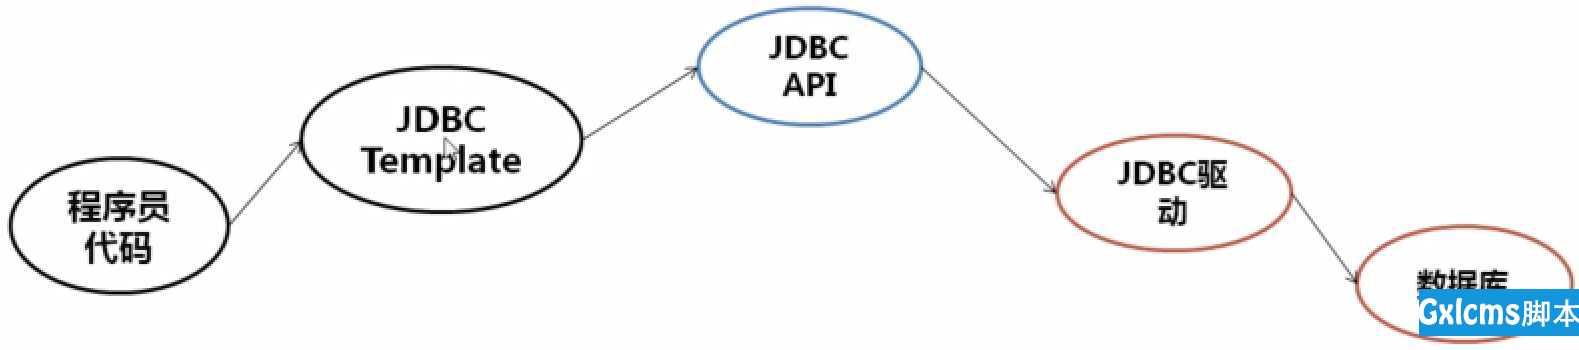 Java——JDBC Template - 文章图片